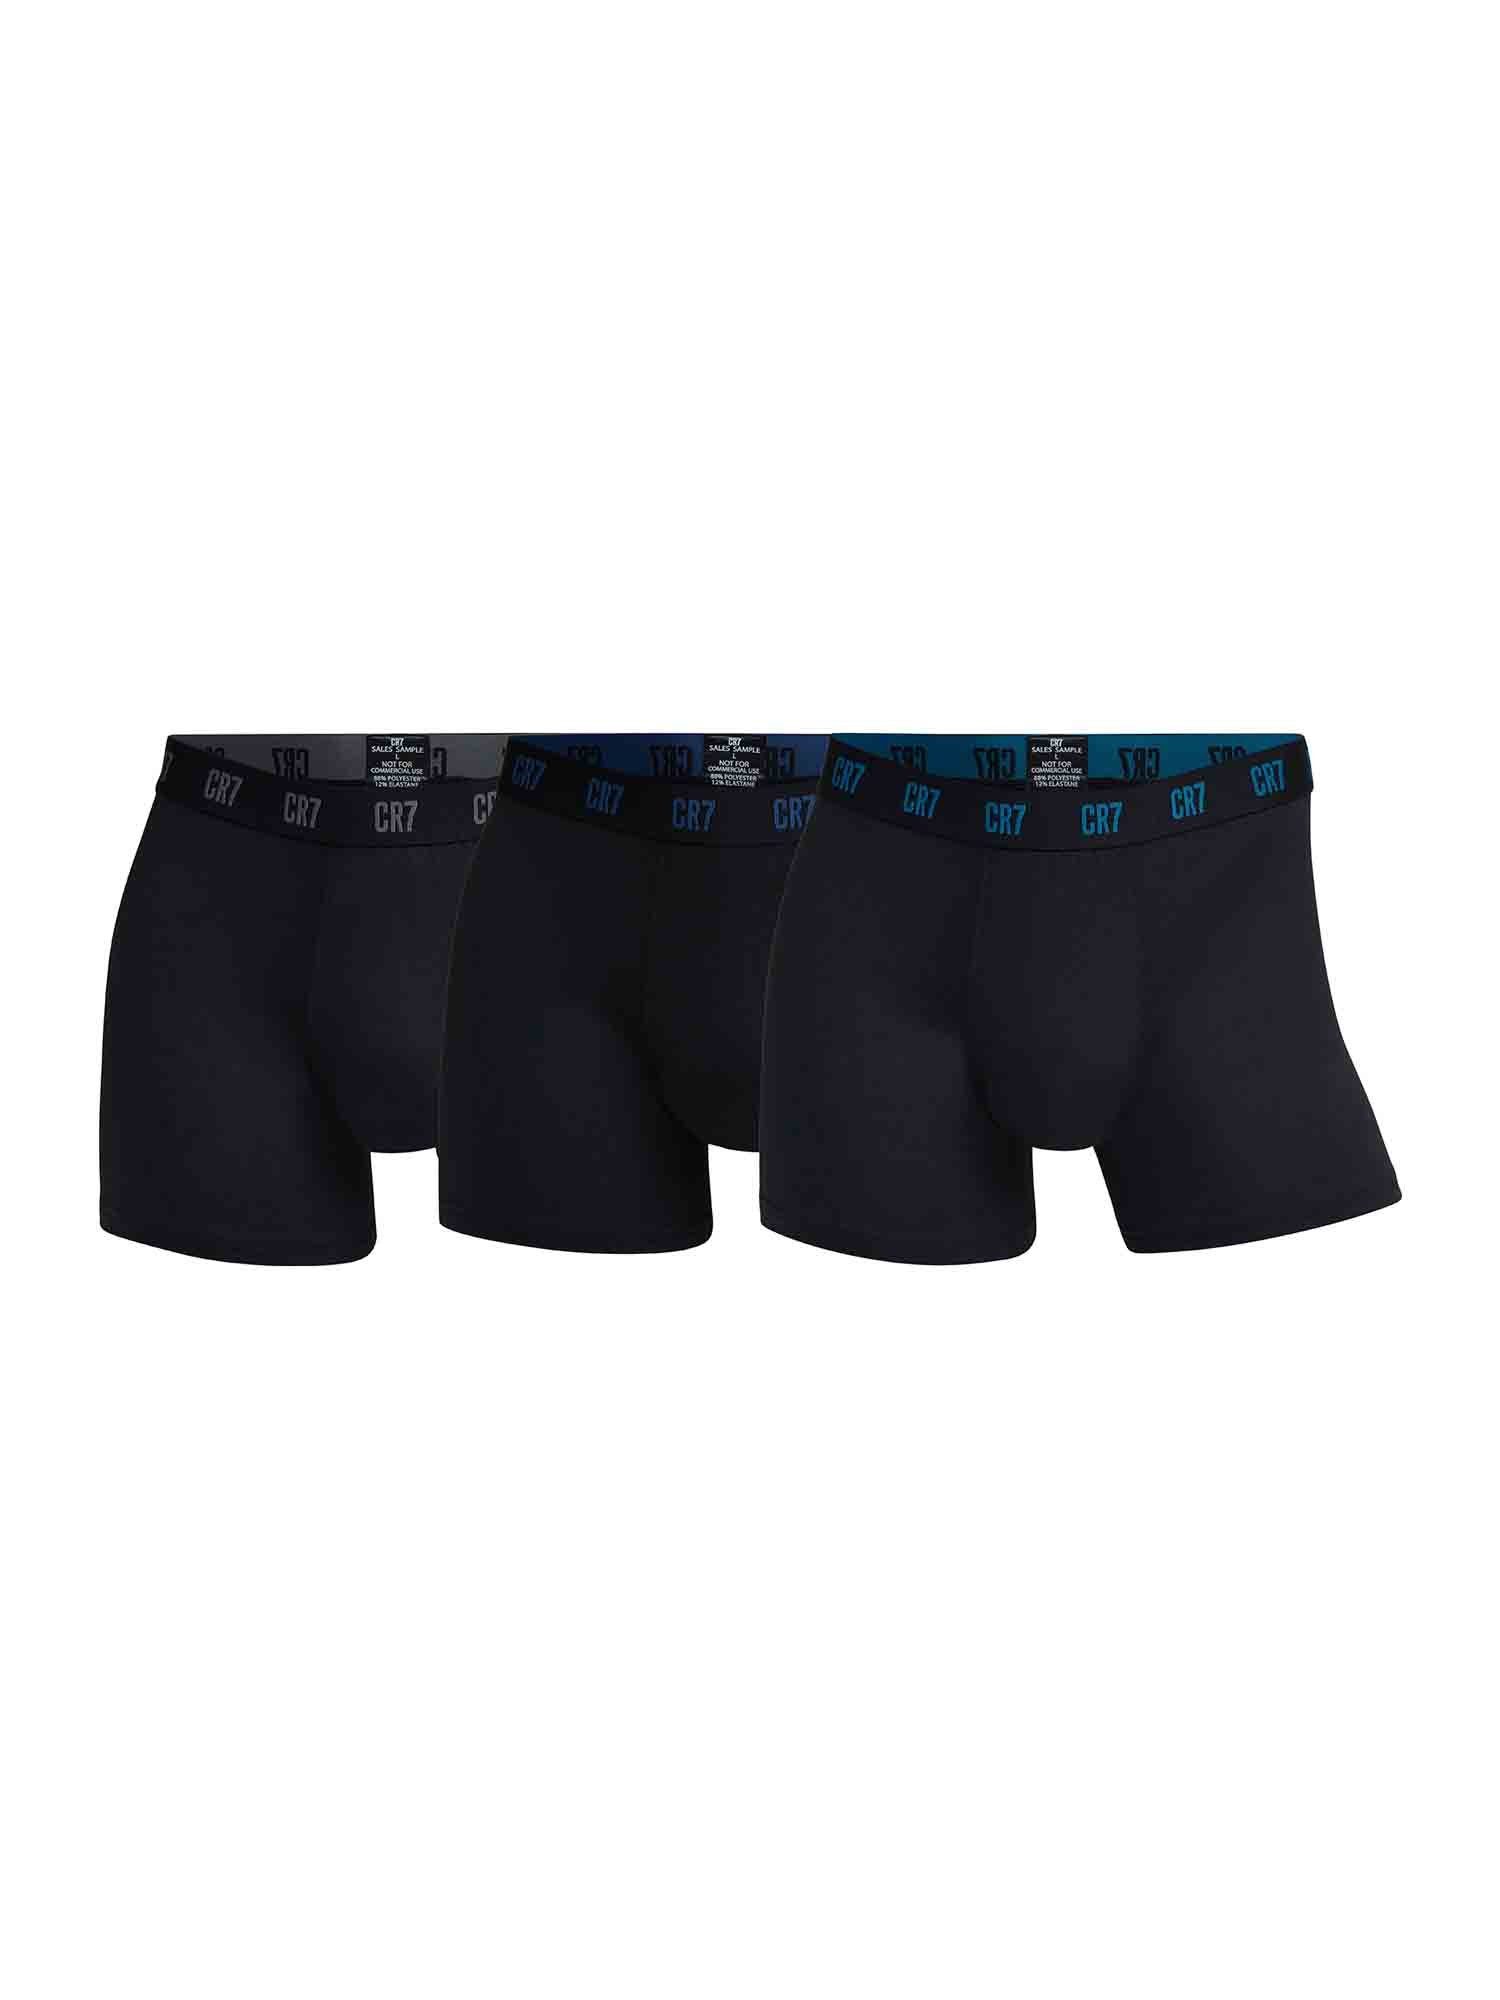 Multipack Boxershorts CR7 Retro (3-St) Retro 18 Trunks Männer Multi Pants Herren Pants